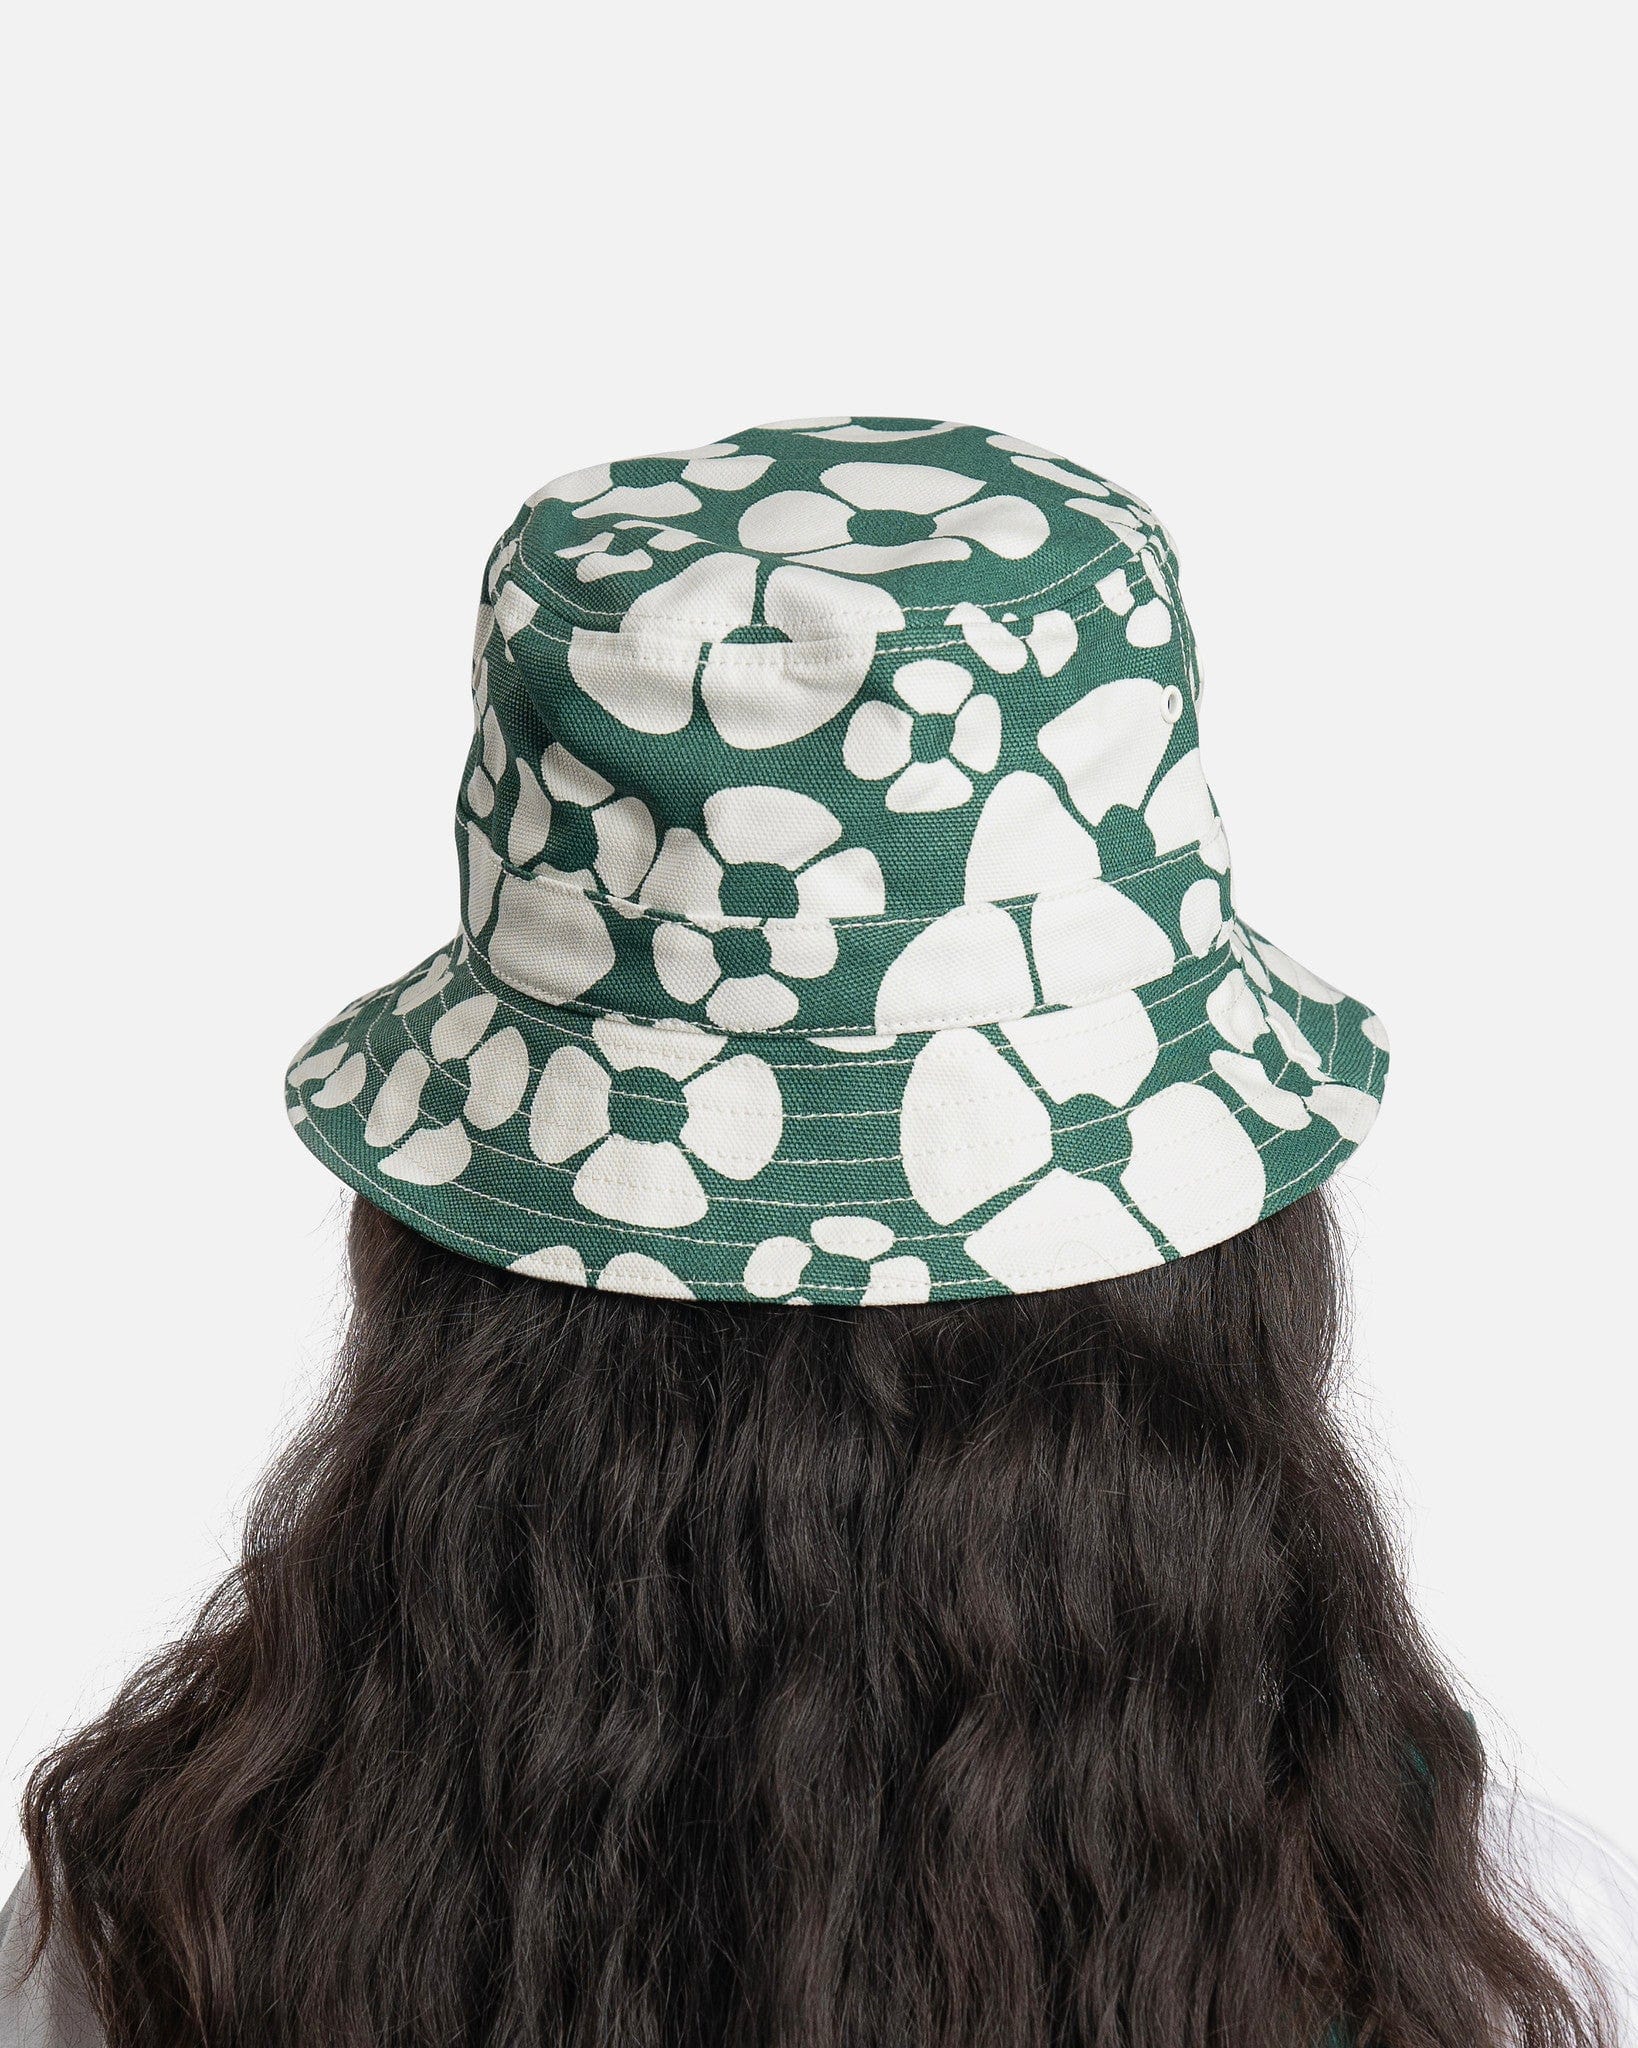 Marni Men's Hats Carhartt Bucket Hat in Forest Green